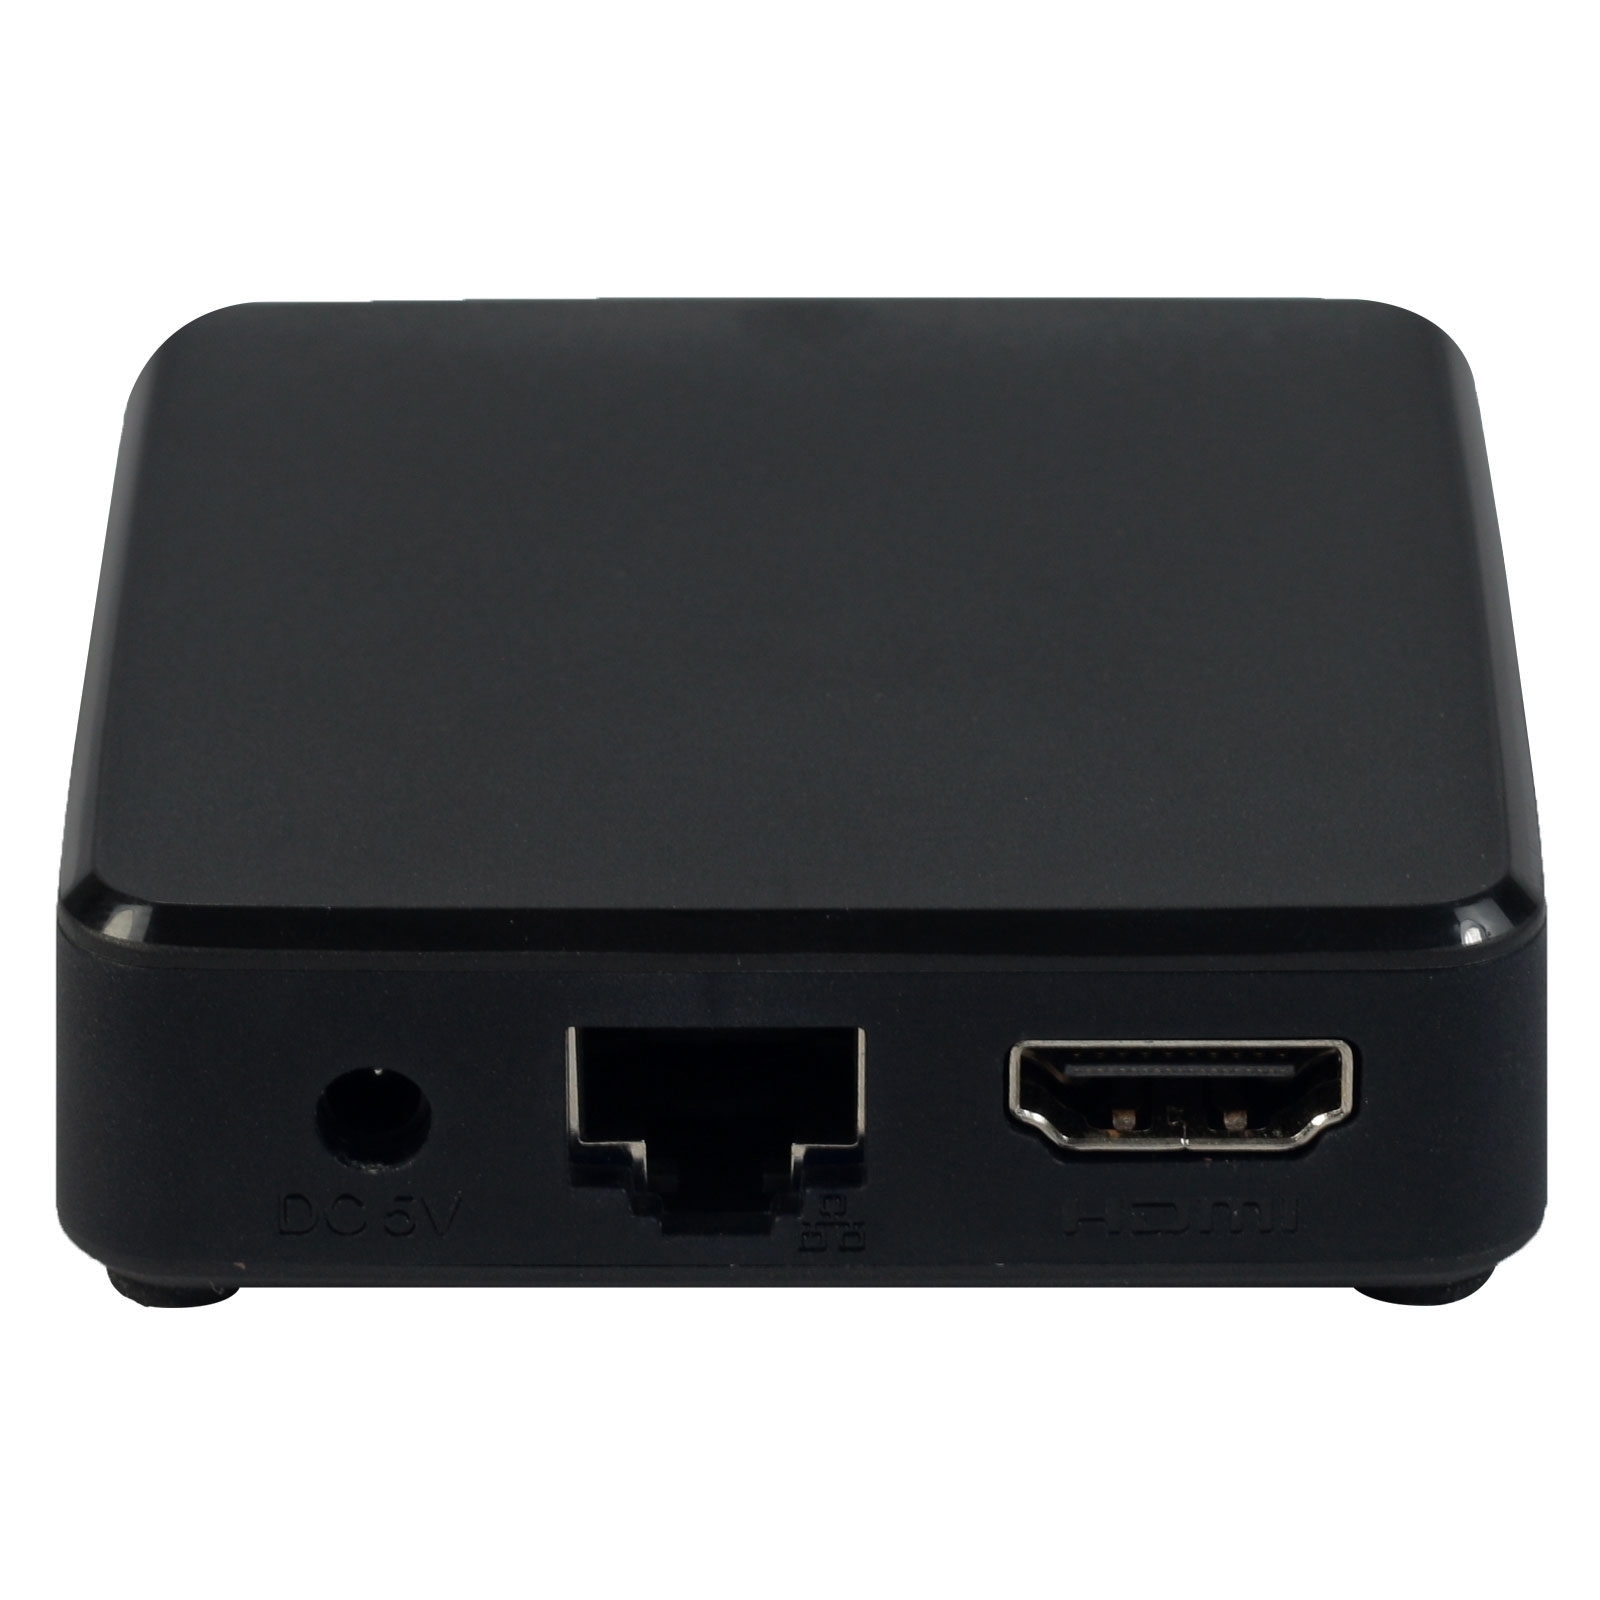 TVIP S-Box v.530 4K UHD IP Mediaplayer (H.265/H.264, MicroSD, HDMI, LAN, USB, schwarz)